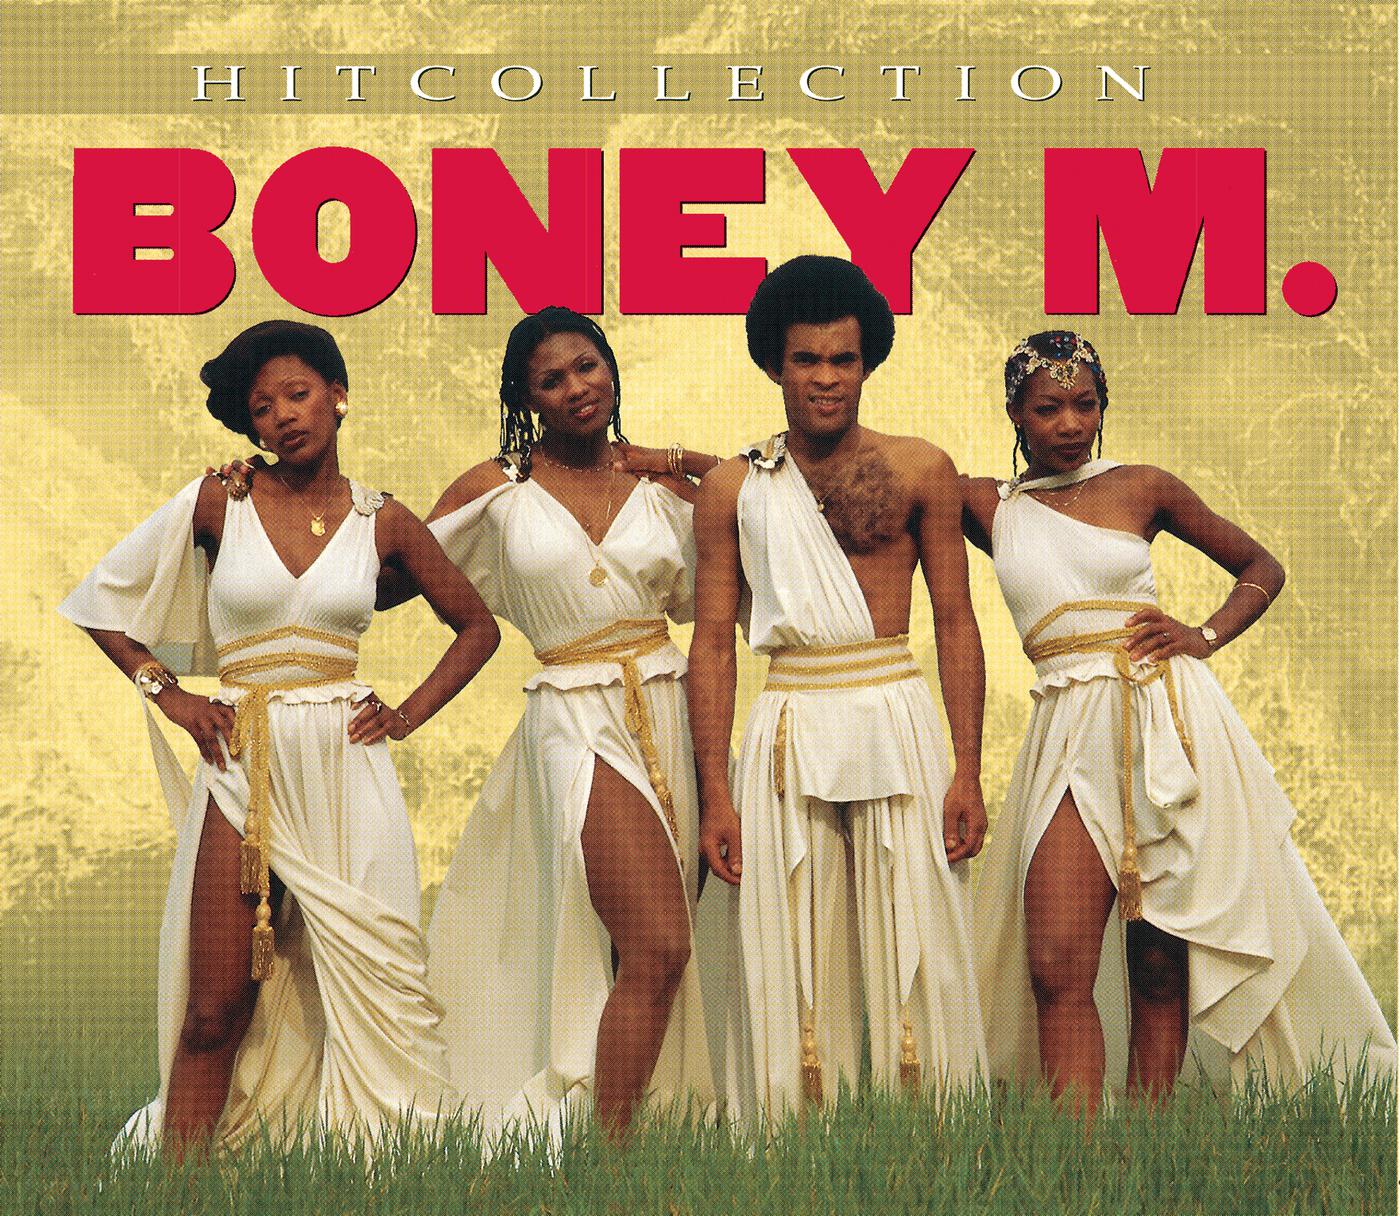 Boney m happy. Группа Boney m.. Группа Boney m. в 80. Бони м ма Бейкер. Группа Бони м 1976.